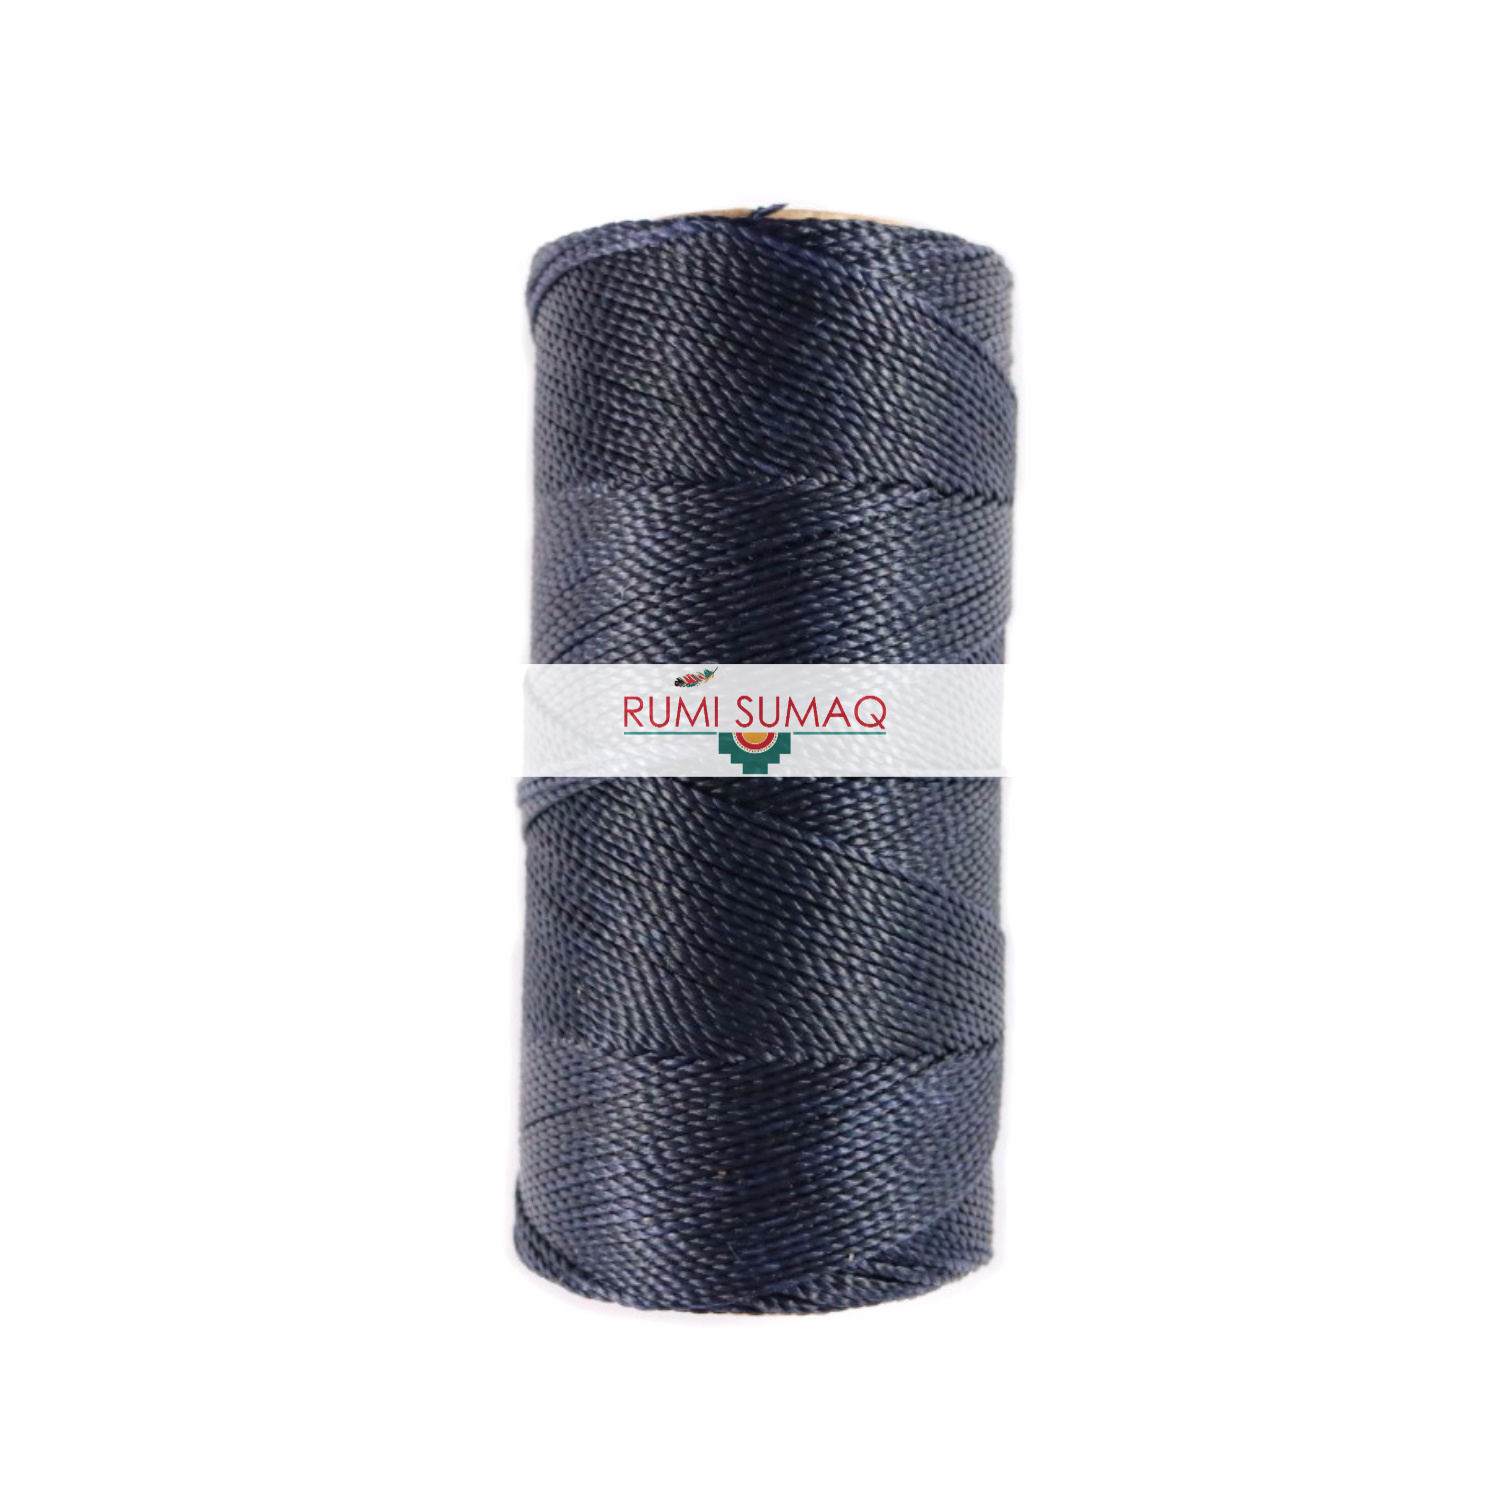 Linhasita 73 Navy 1mm Waxed Polyester Cord | Rumi Sumaq Waxed Thread for Beading, Macrame Knotting and Jewelry Making